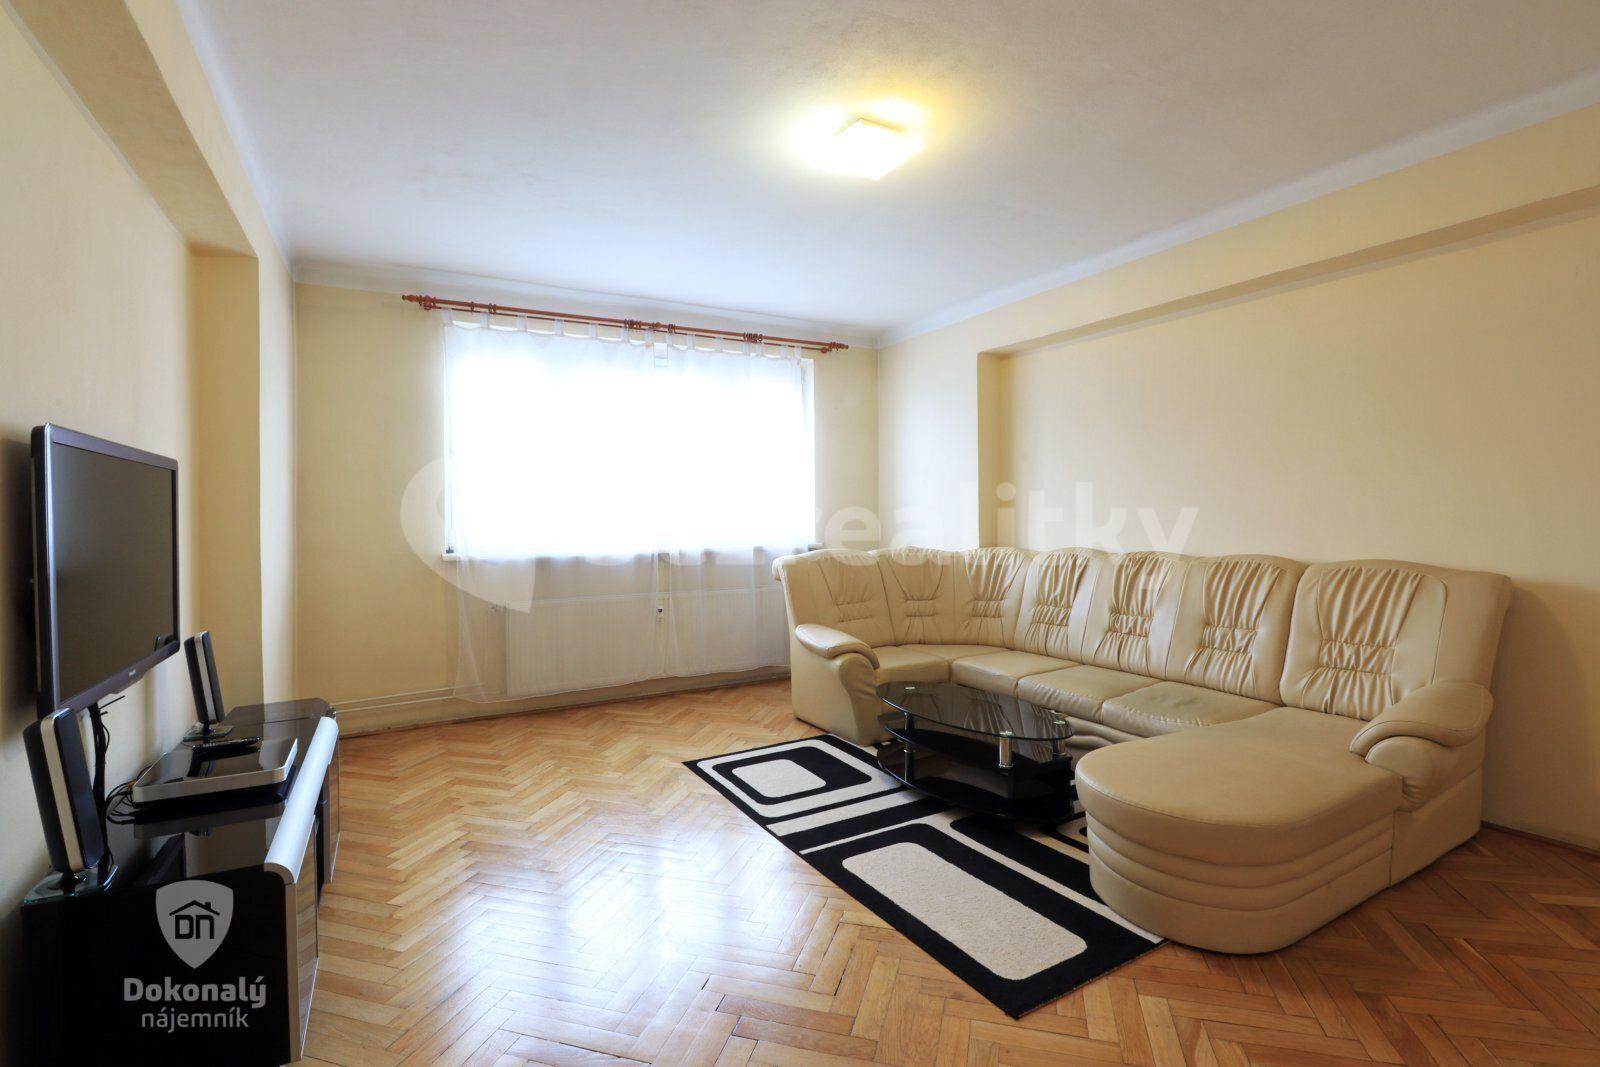 2 bedroom flat to rent, 75 m², Za Hládkovem, Prague, Prague